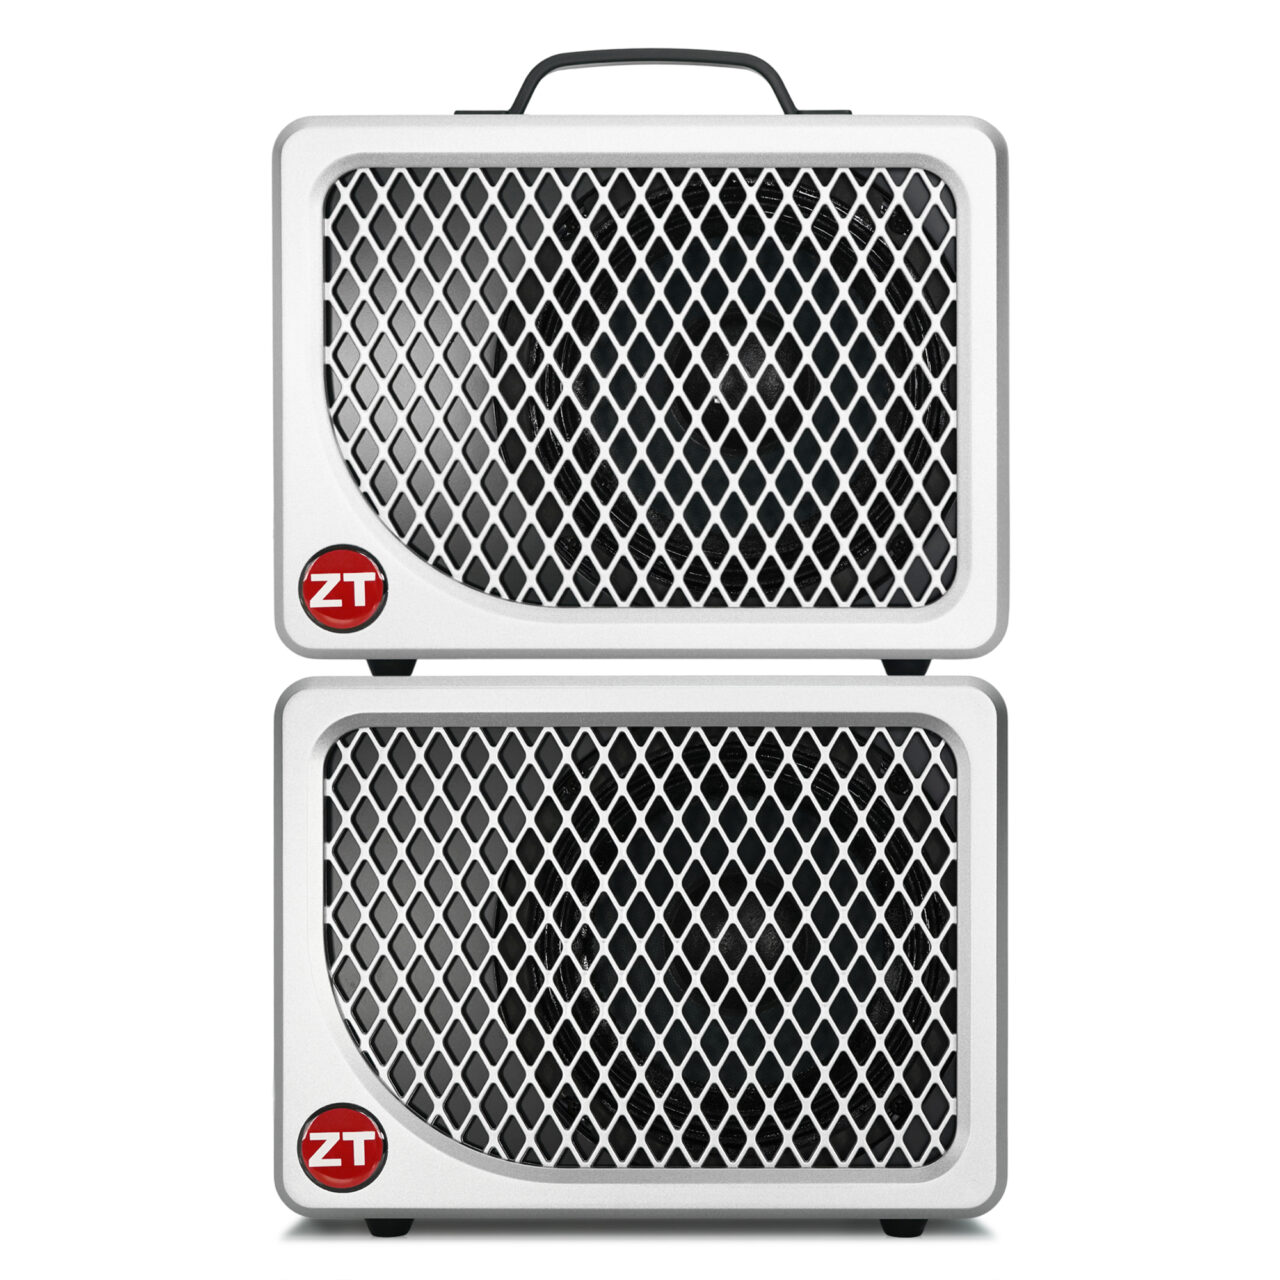 ZT Amp Lunchbox Reverb Amp Lunchbox Cab II Set ギターアンプ スピーカーキャビネットセット